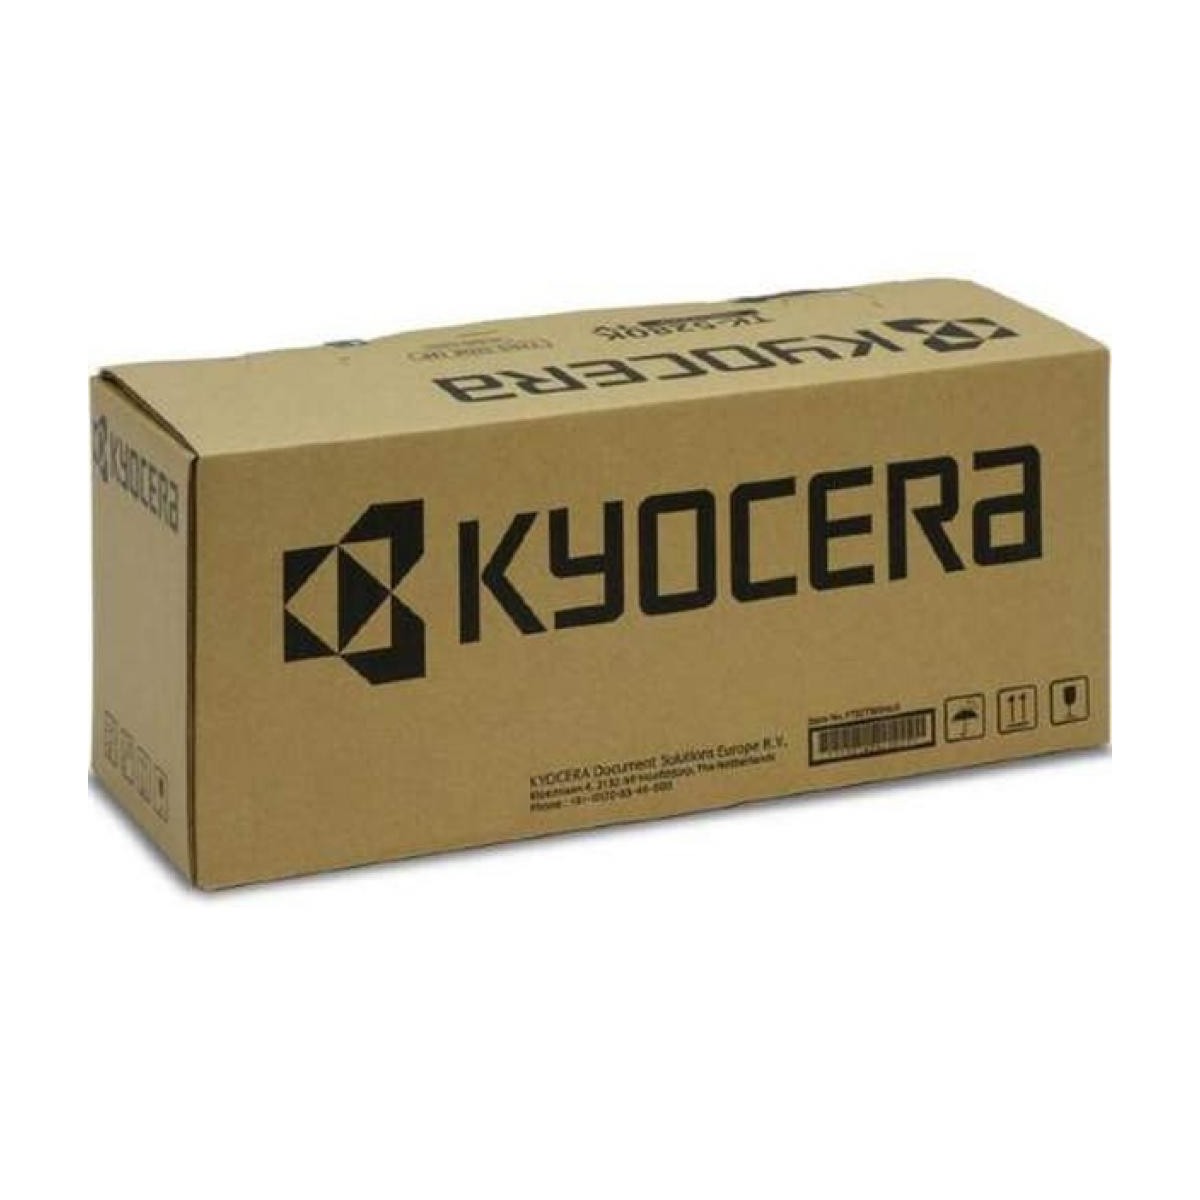 Kyocera Maintenance Kit Pages 300.000